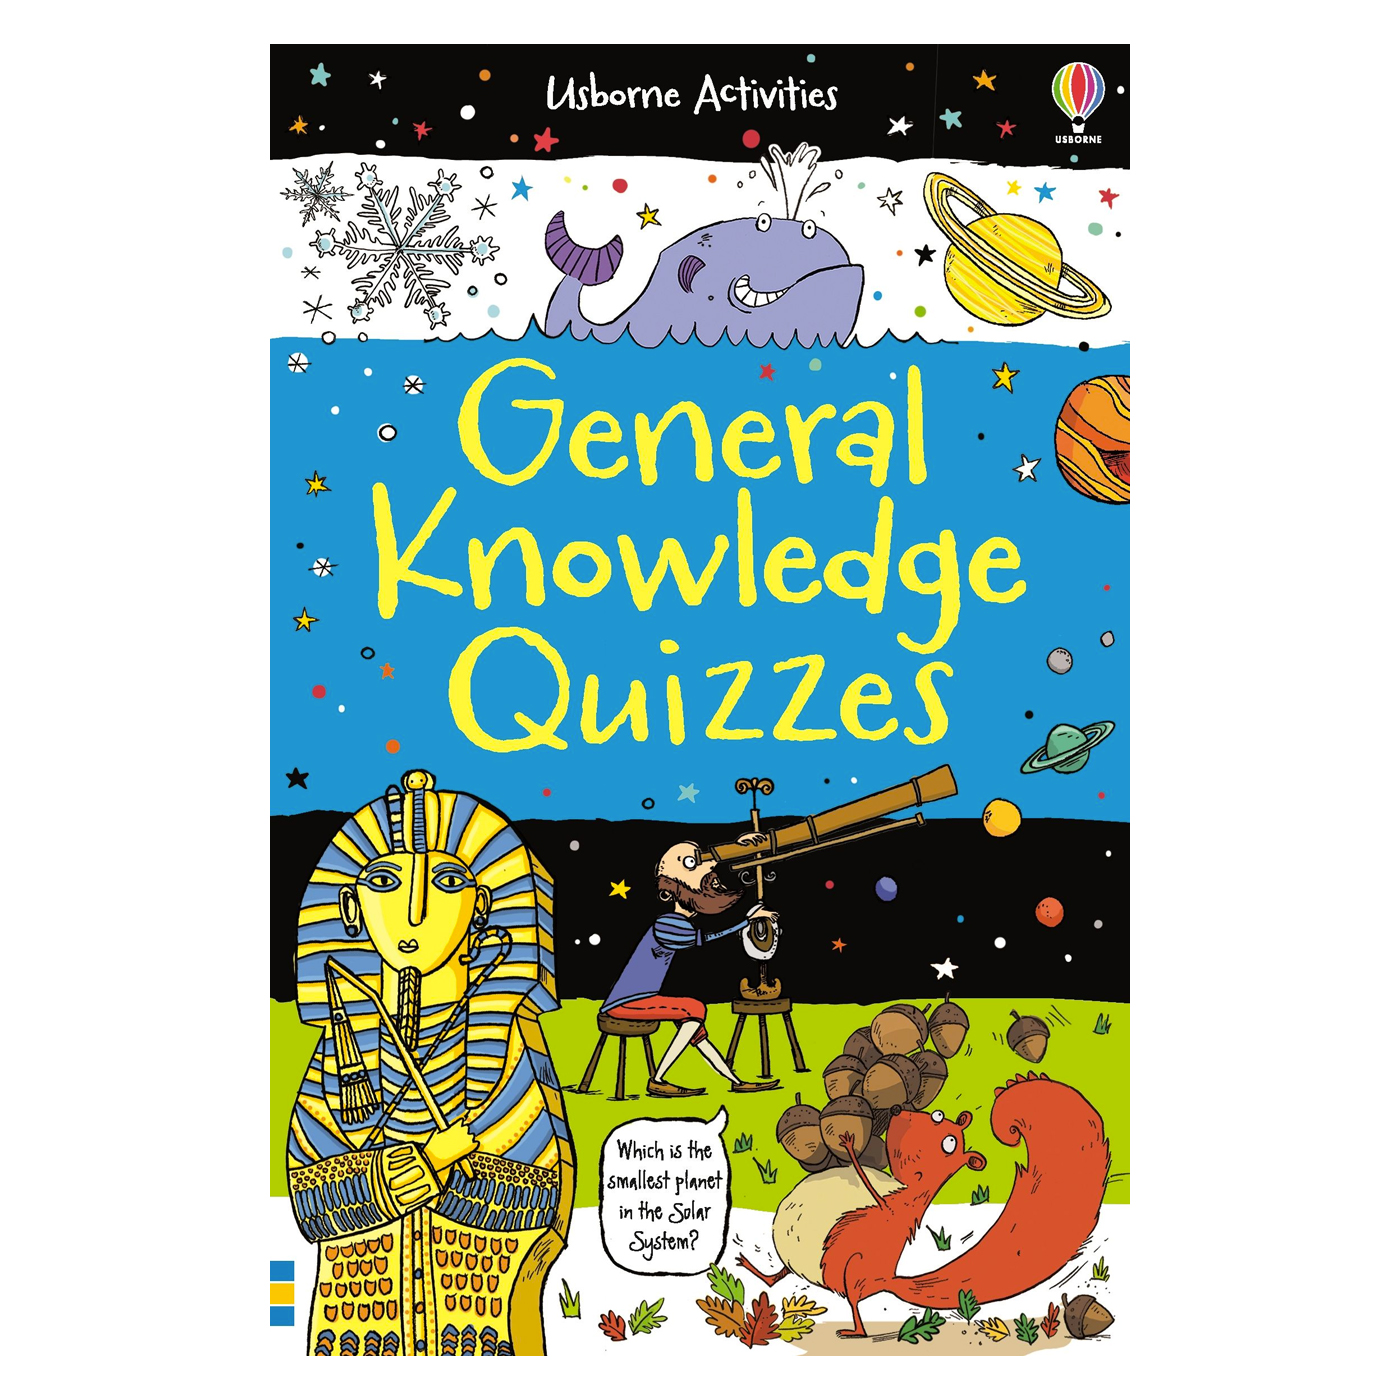  General Knowledge Quizzes